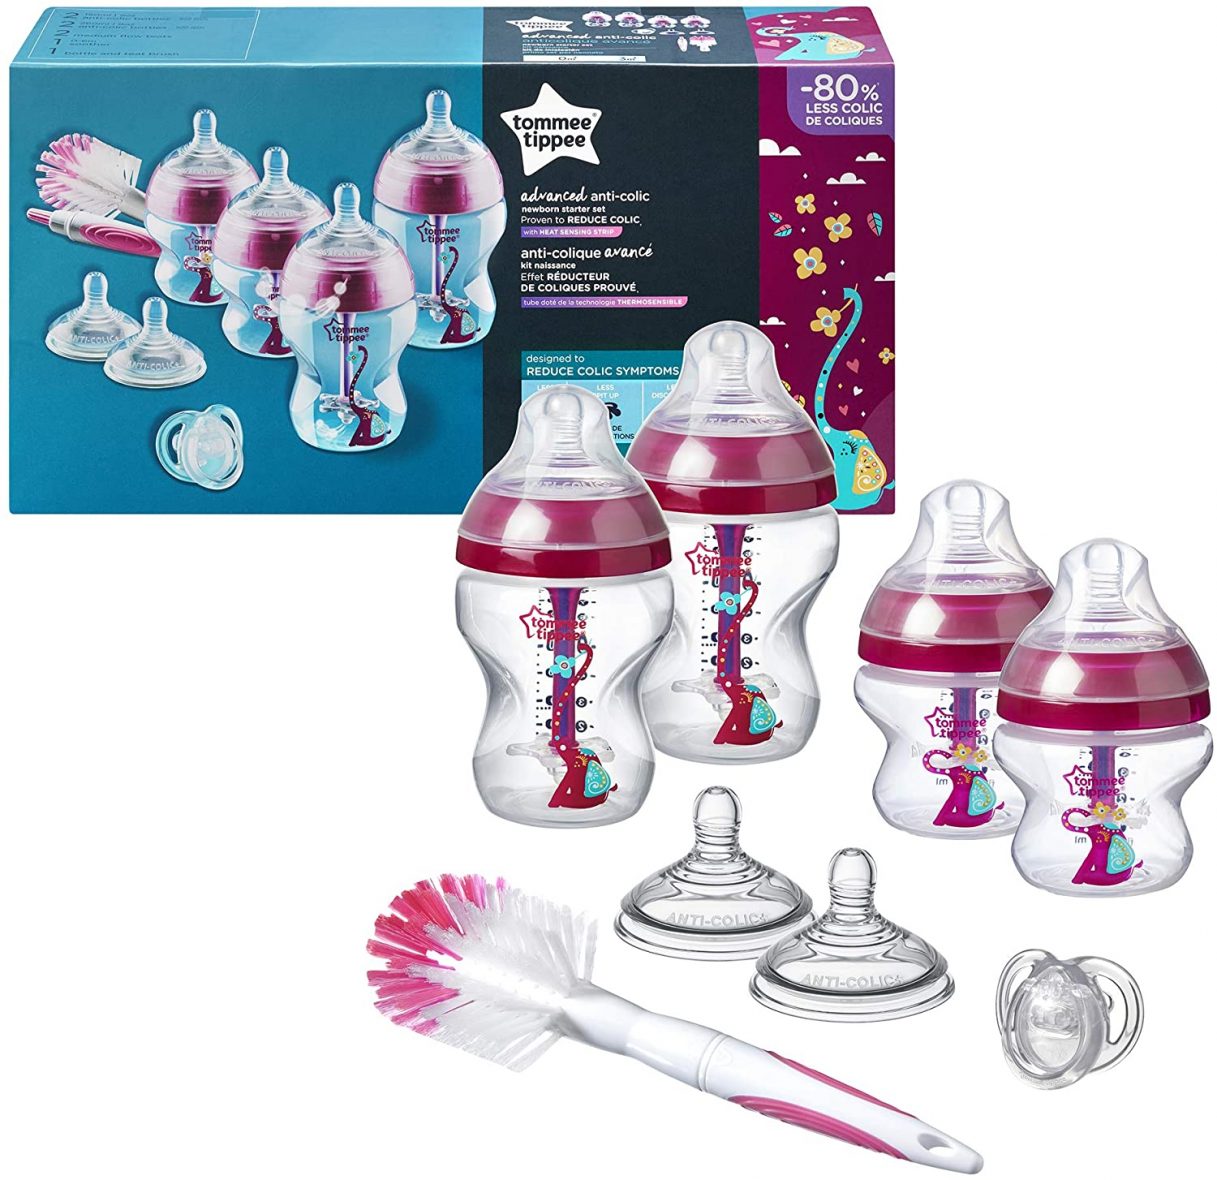 Tommee Tippee Advanced Anti Colic Newborn starter Kit -pink